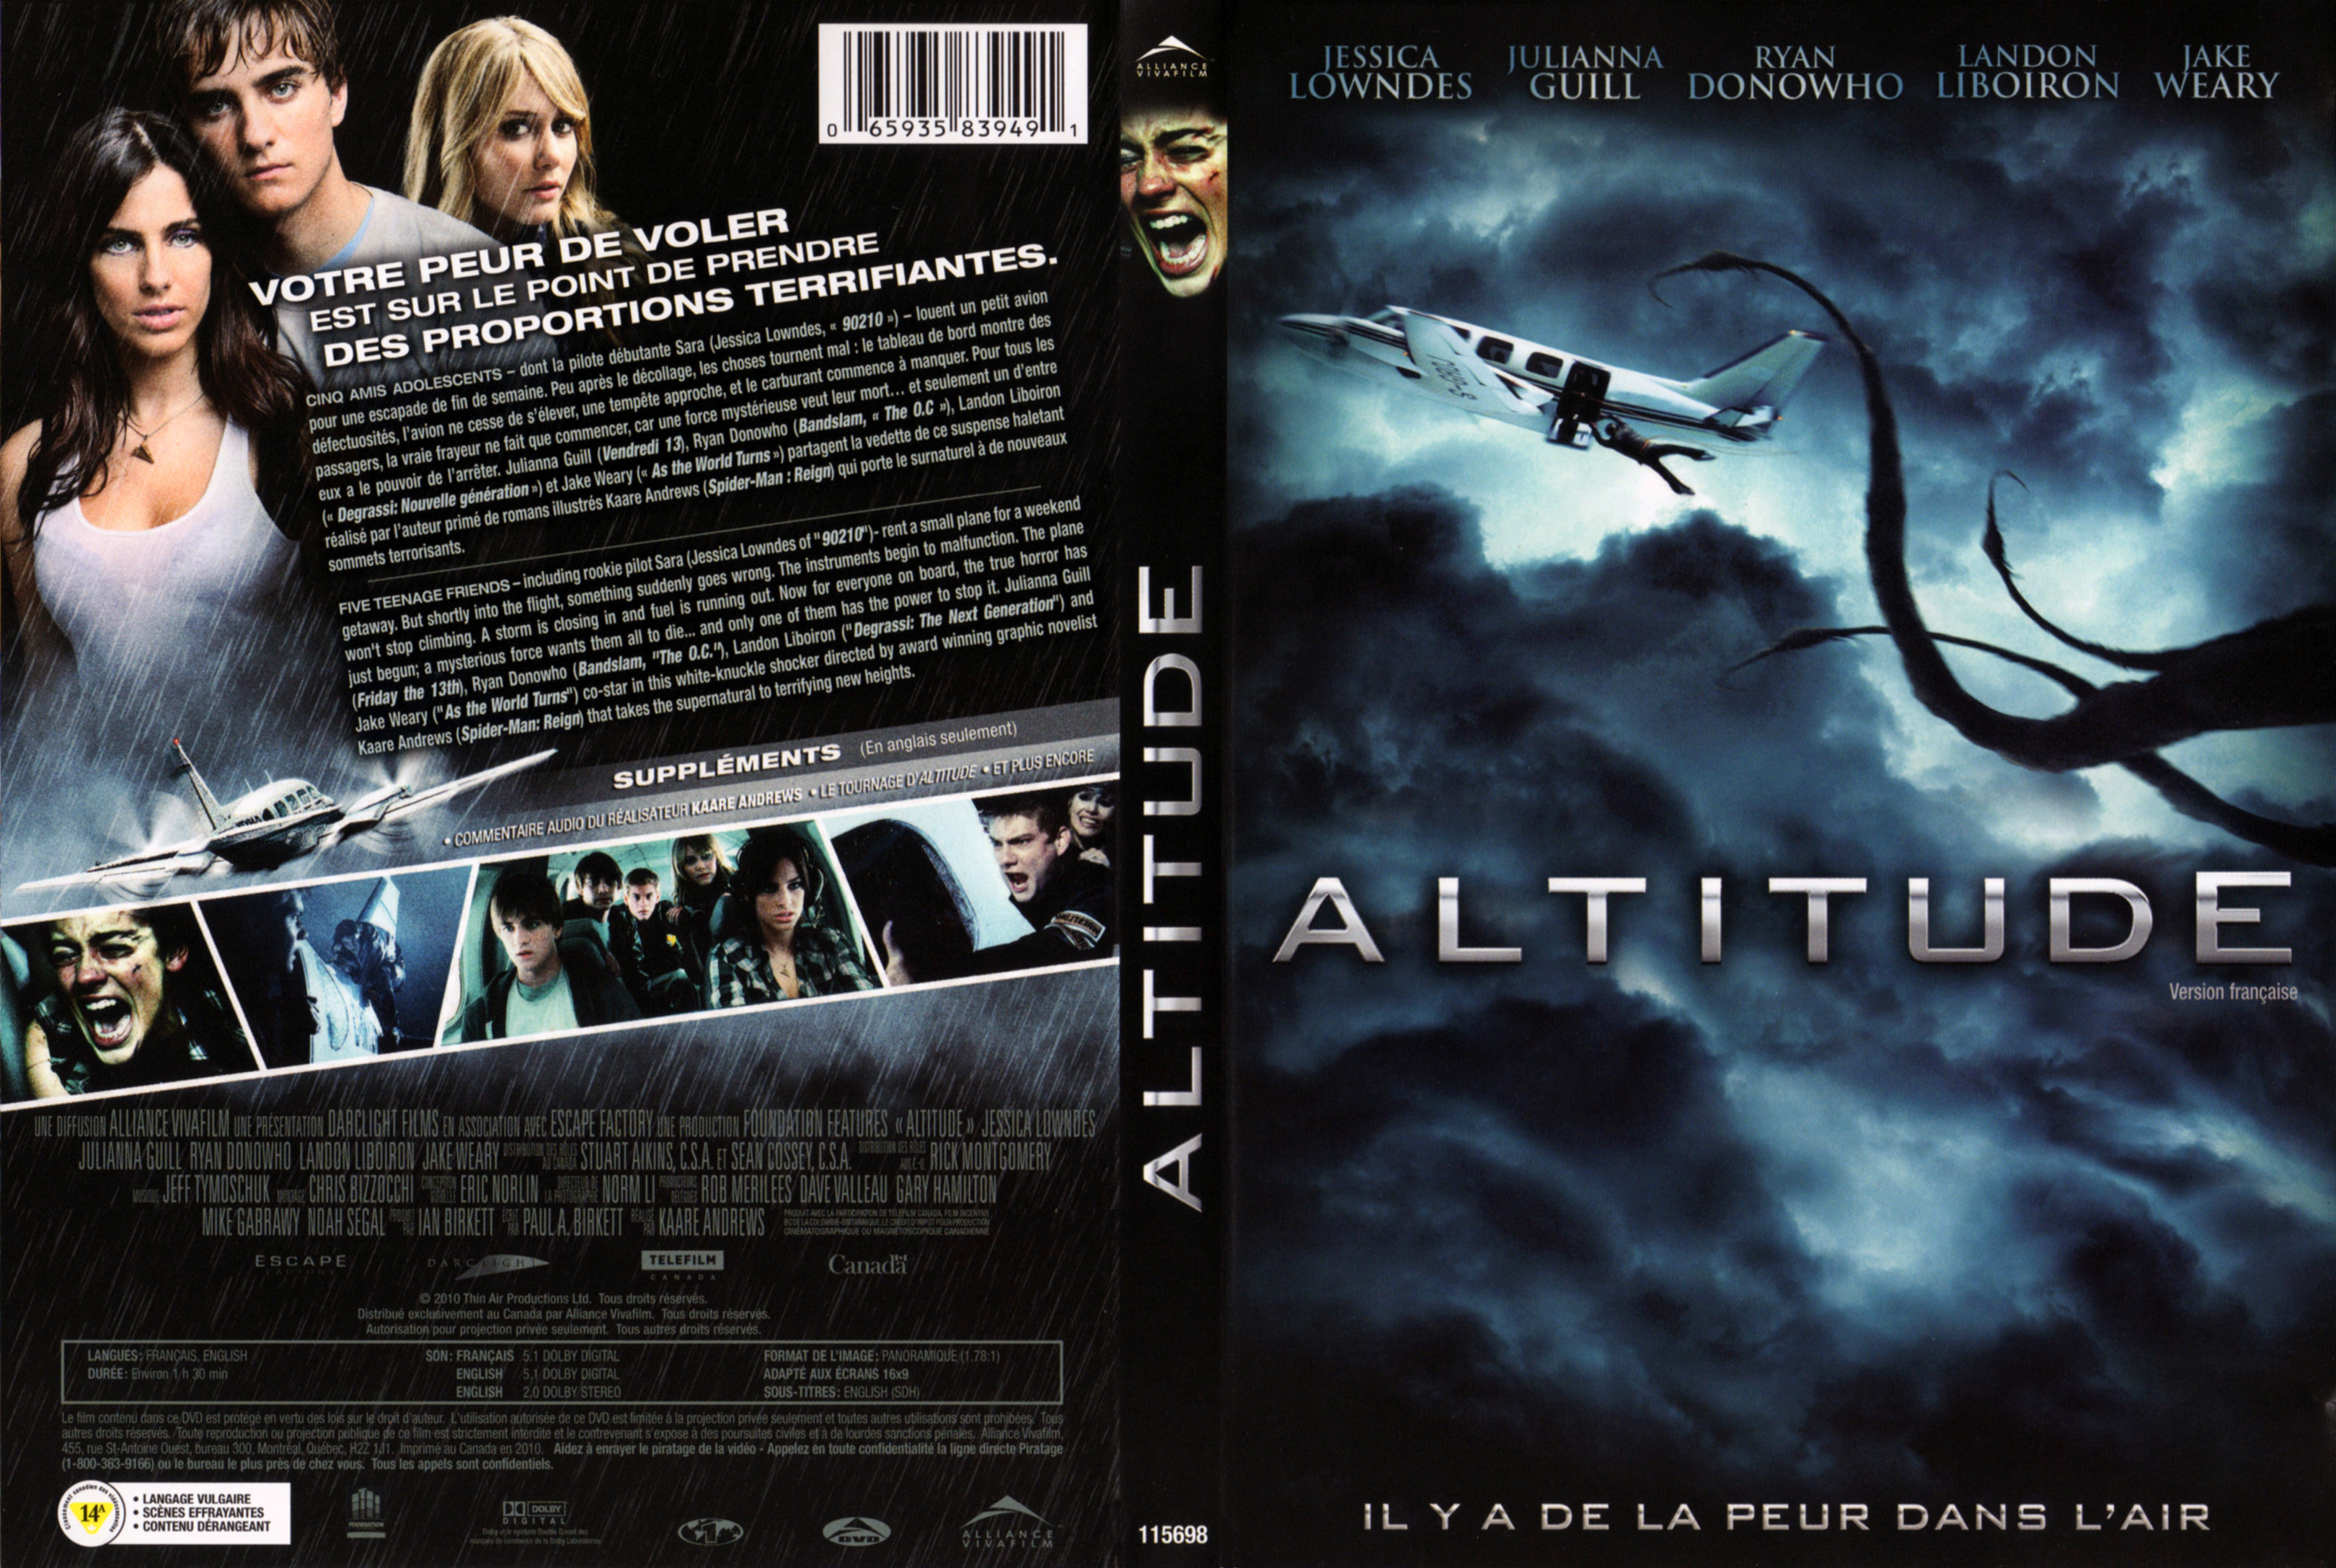 Jaquette DVD Altitude (Canadienne)